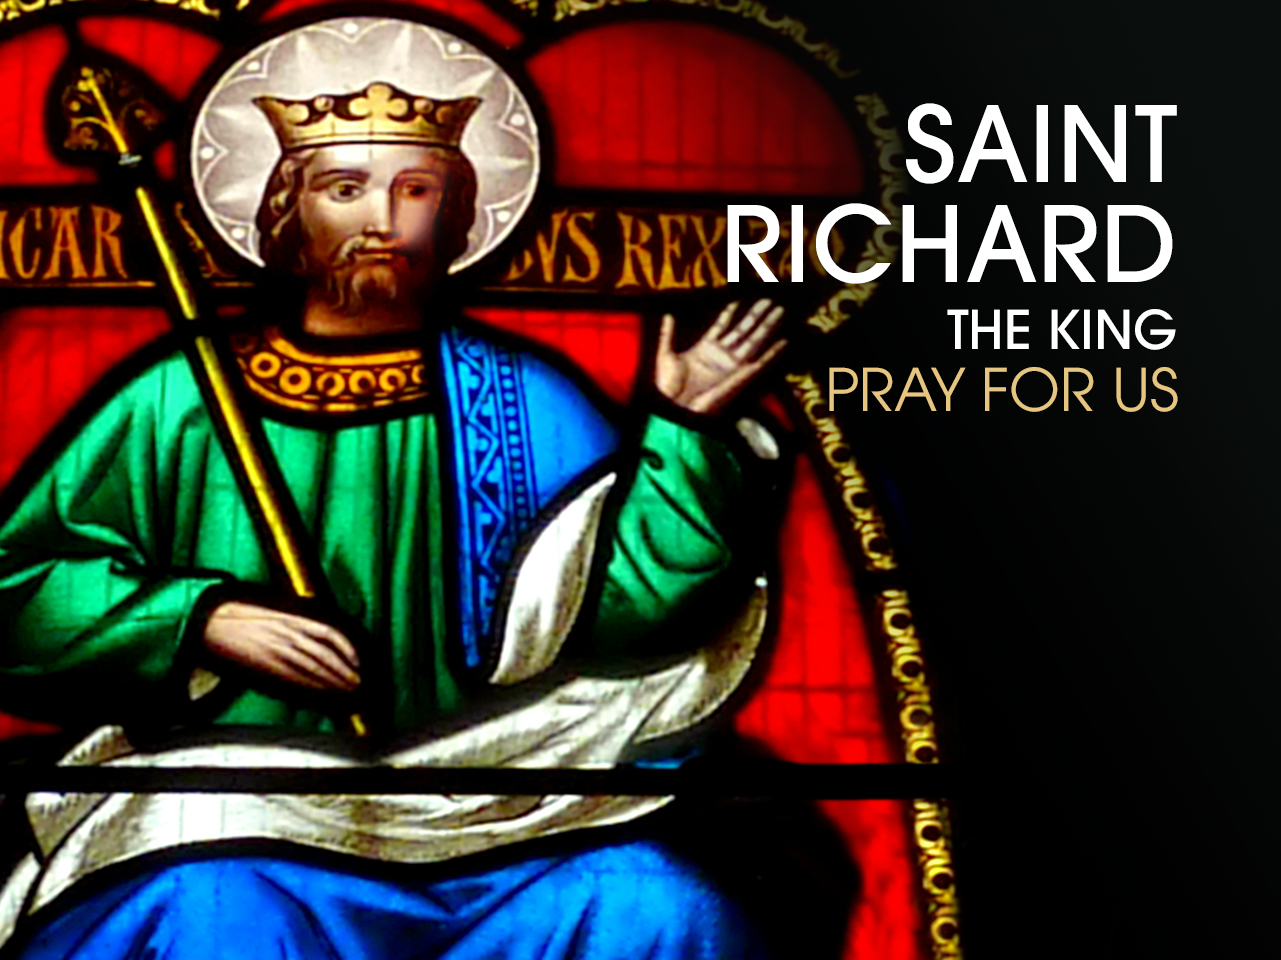 St. Richard the King